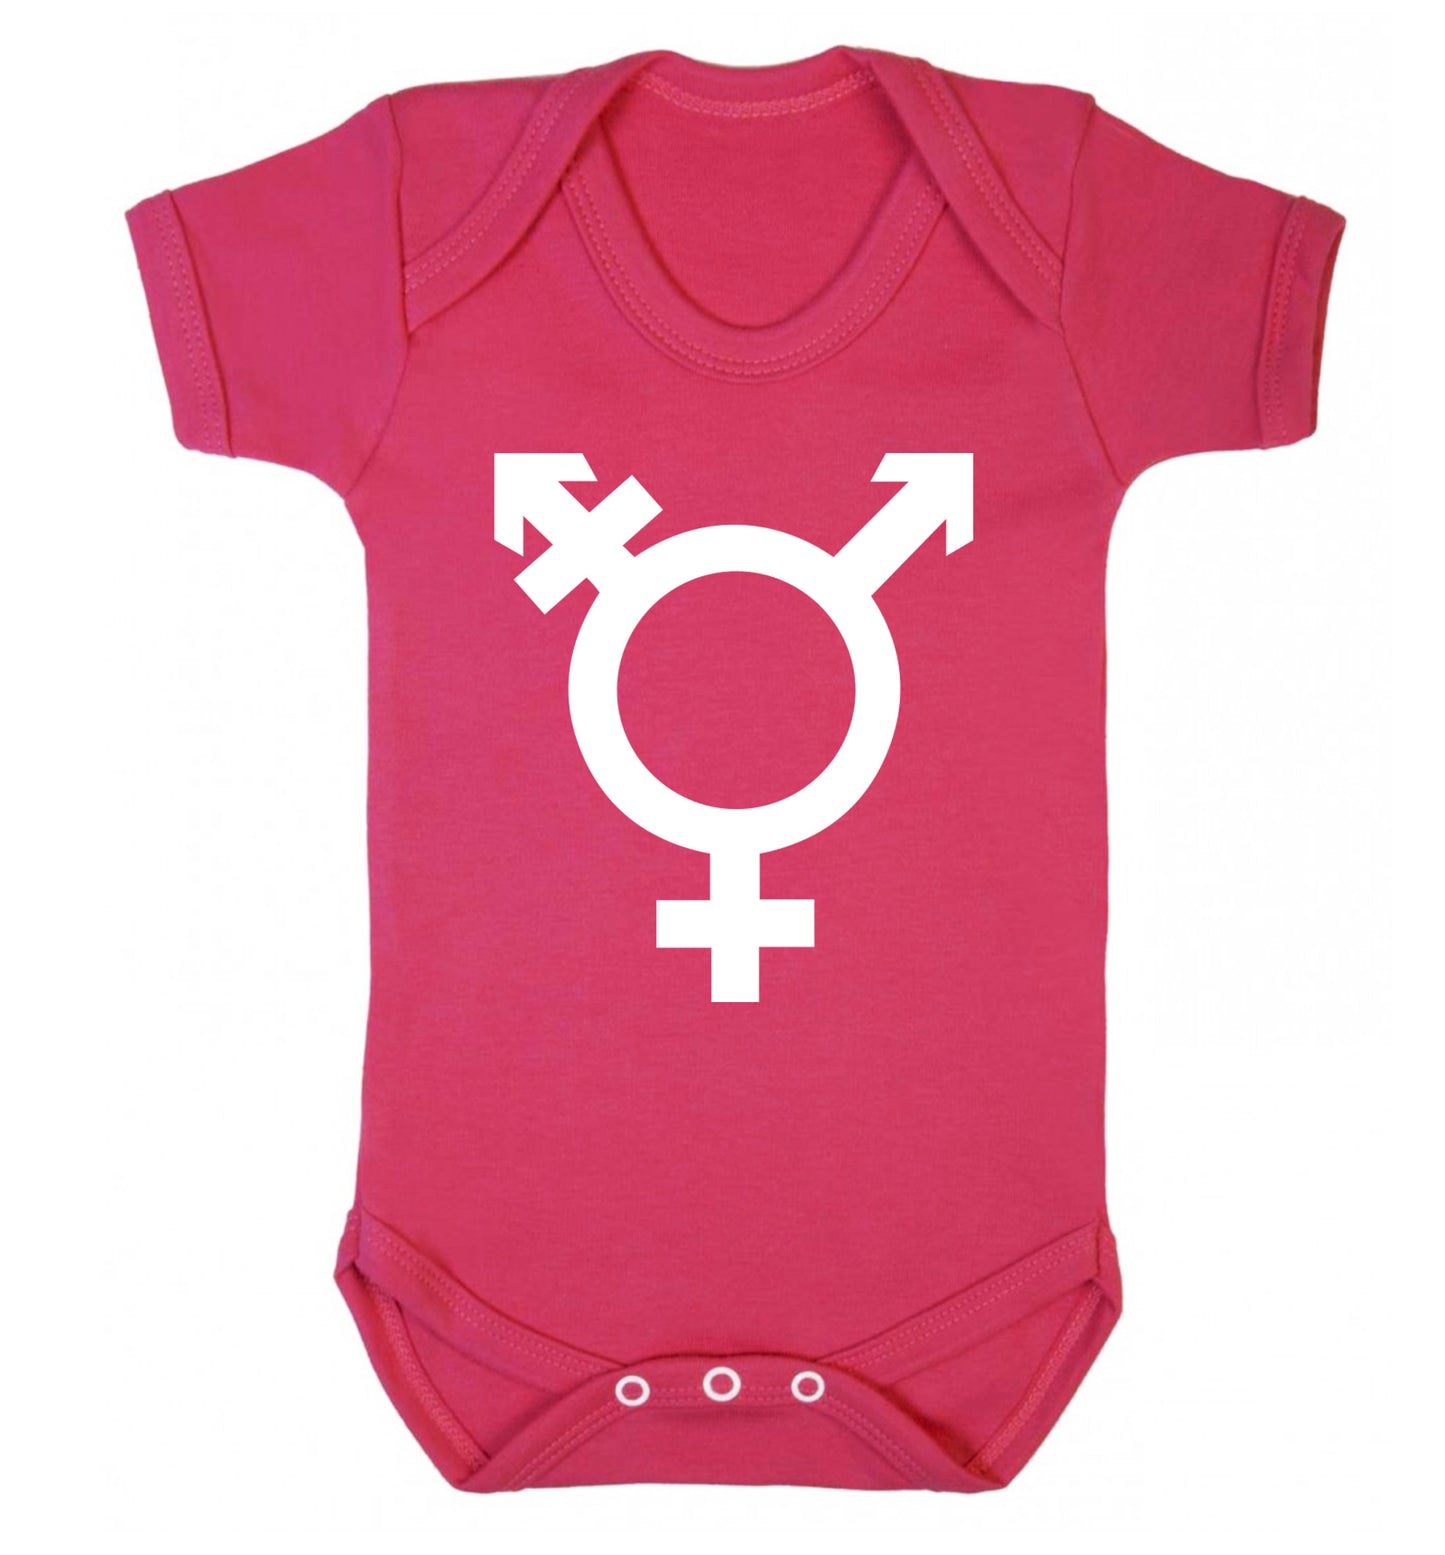 Gender neutral symbol large Baby Vest dark pink 18-24 months